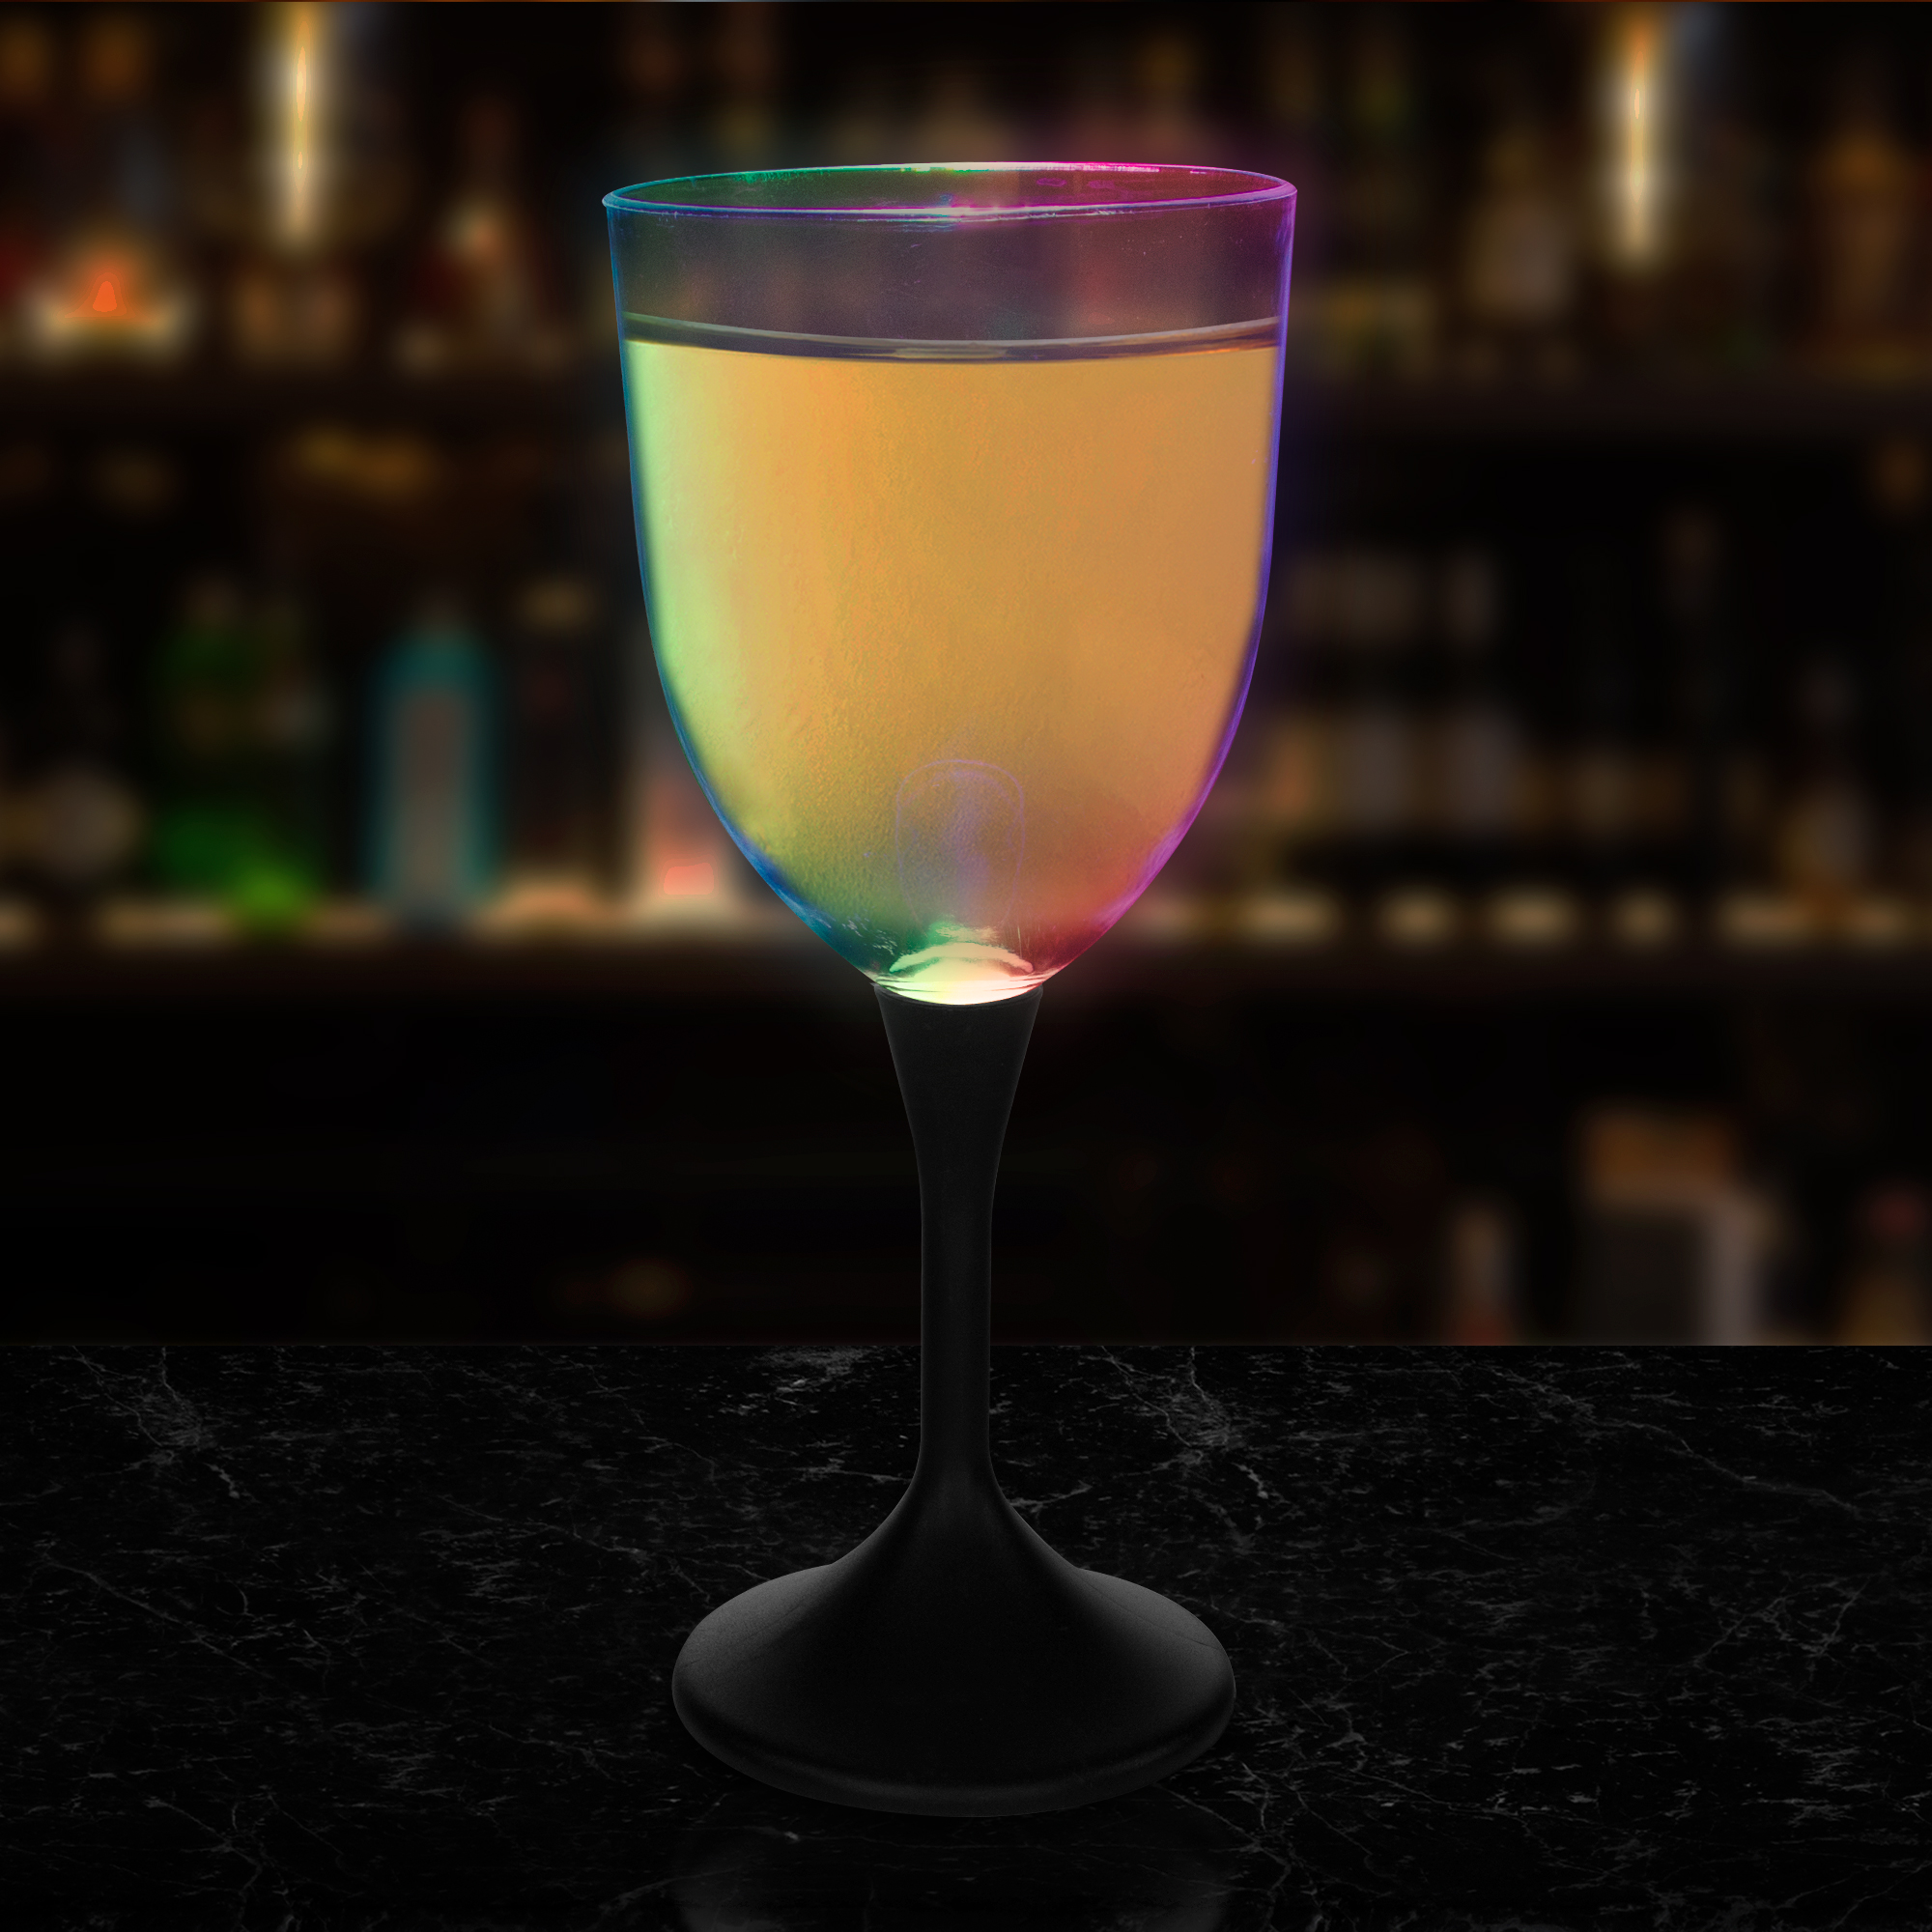 led wine glasses